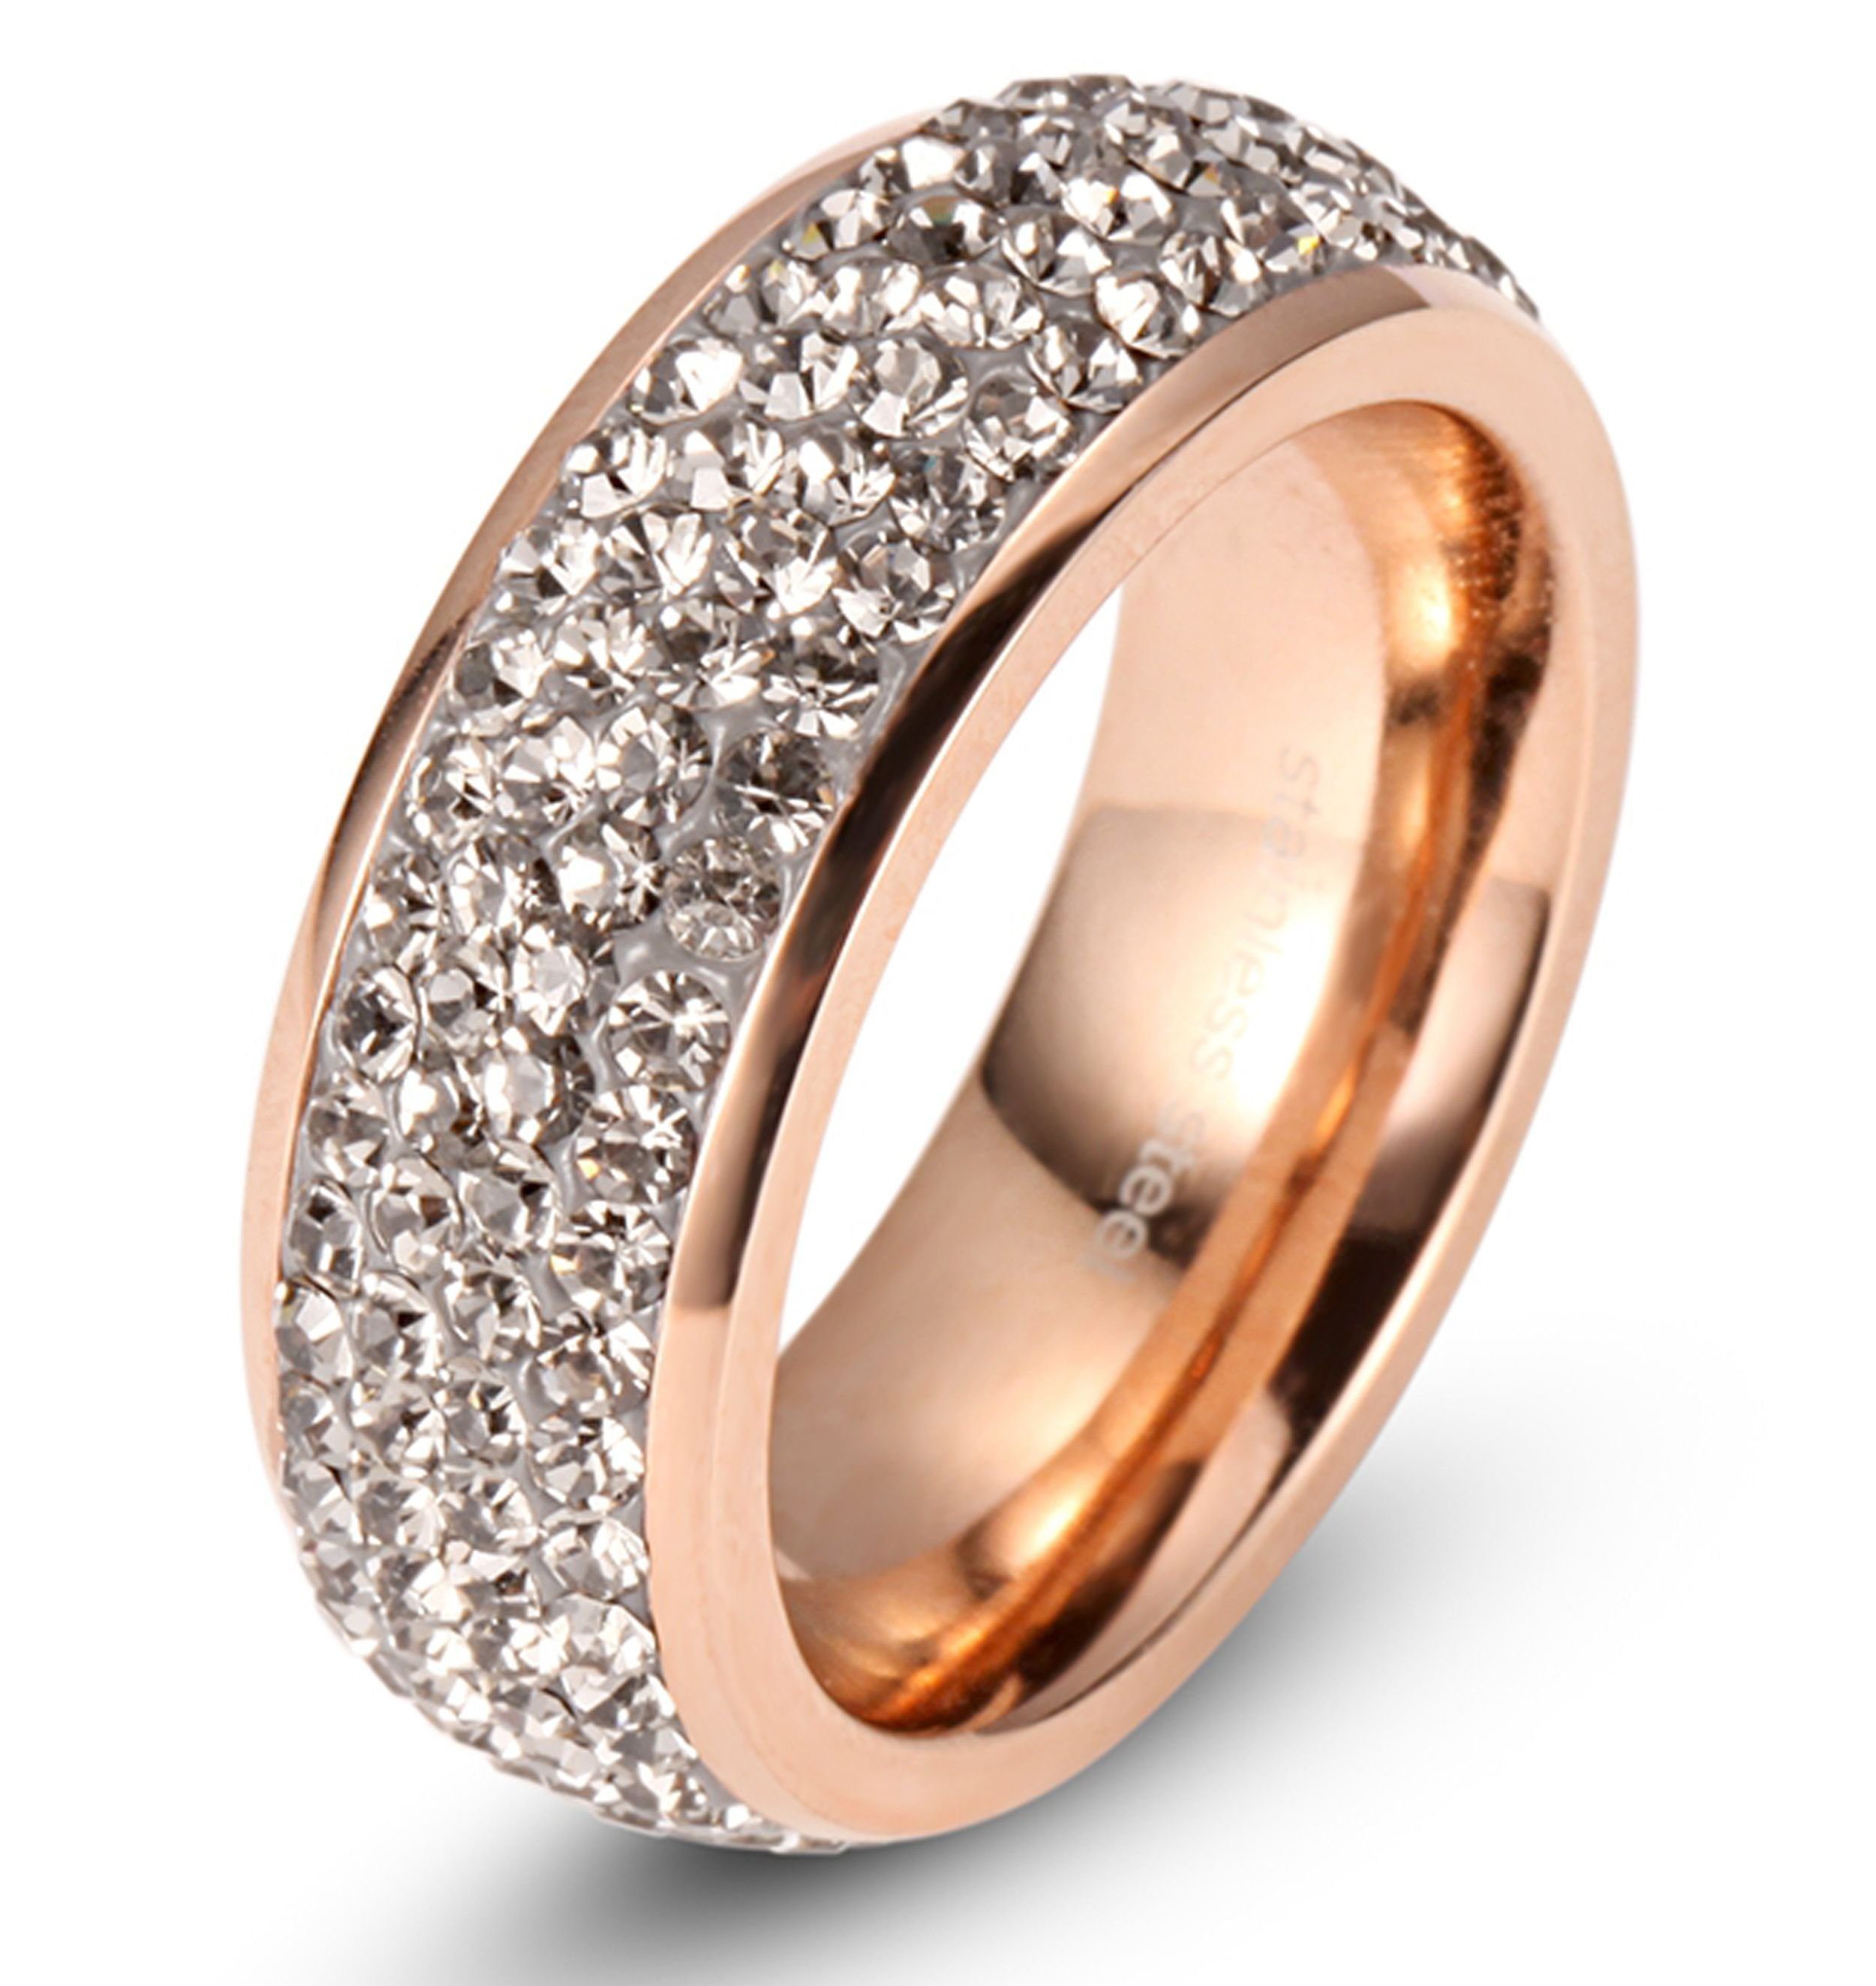 Fingerring "Passion" Kingka Crystal Ring